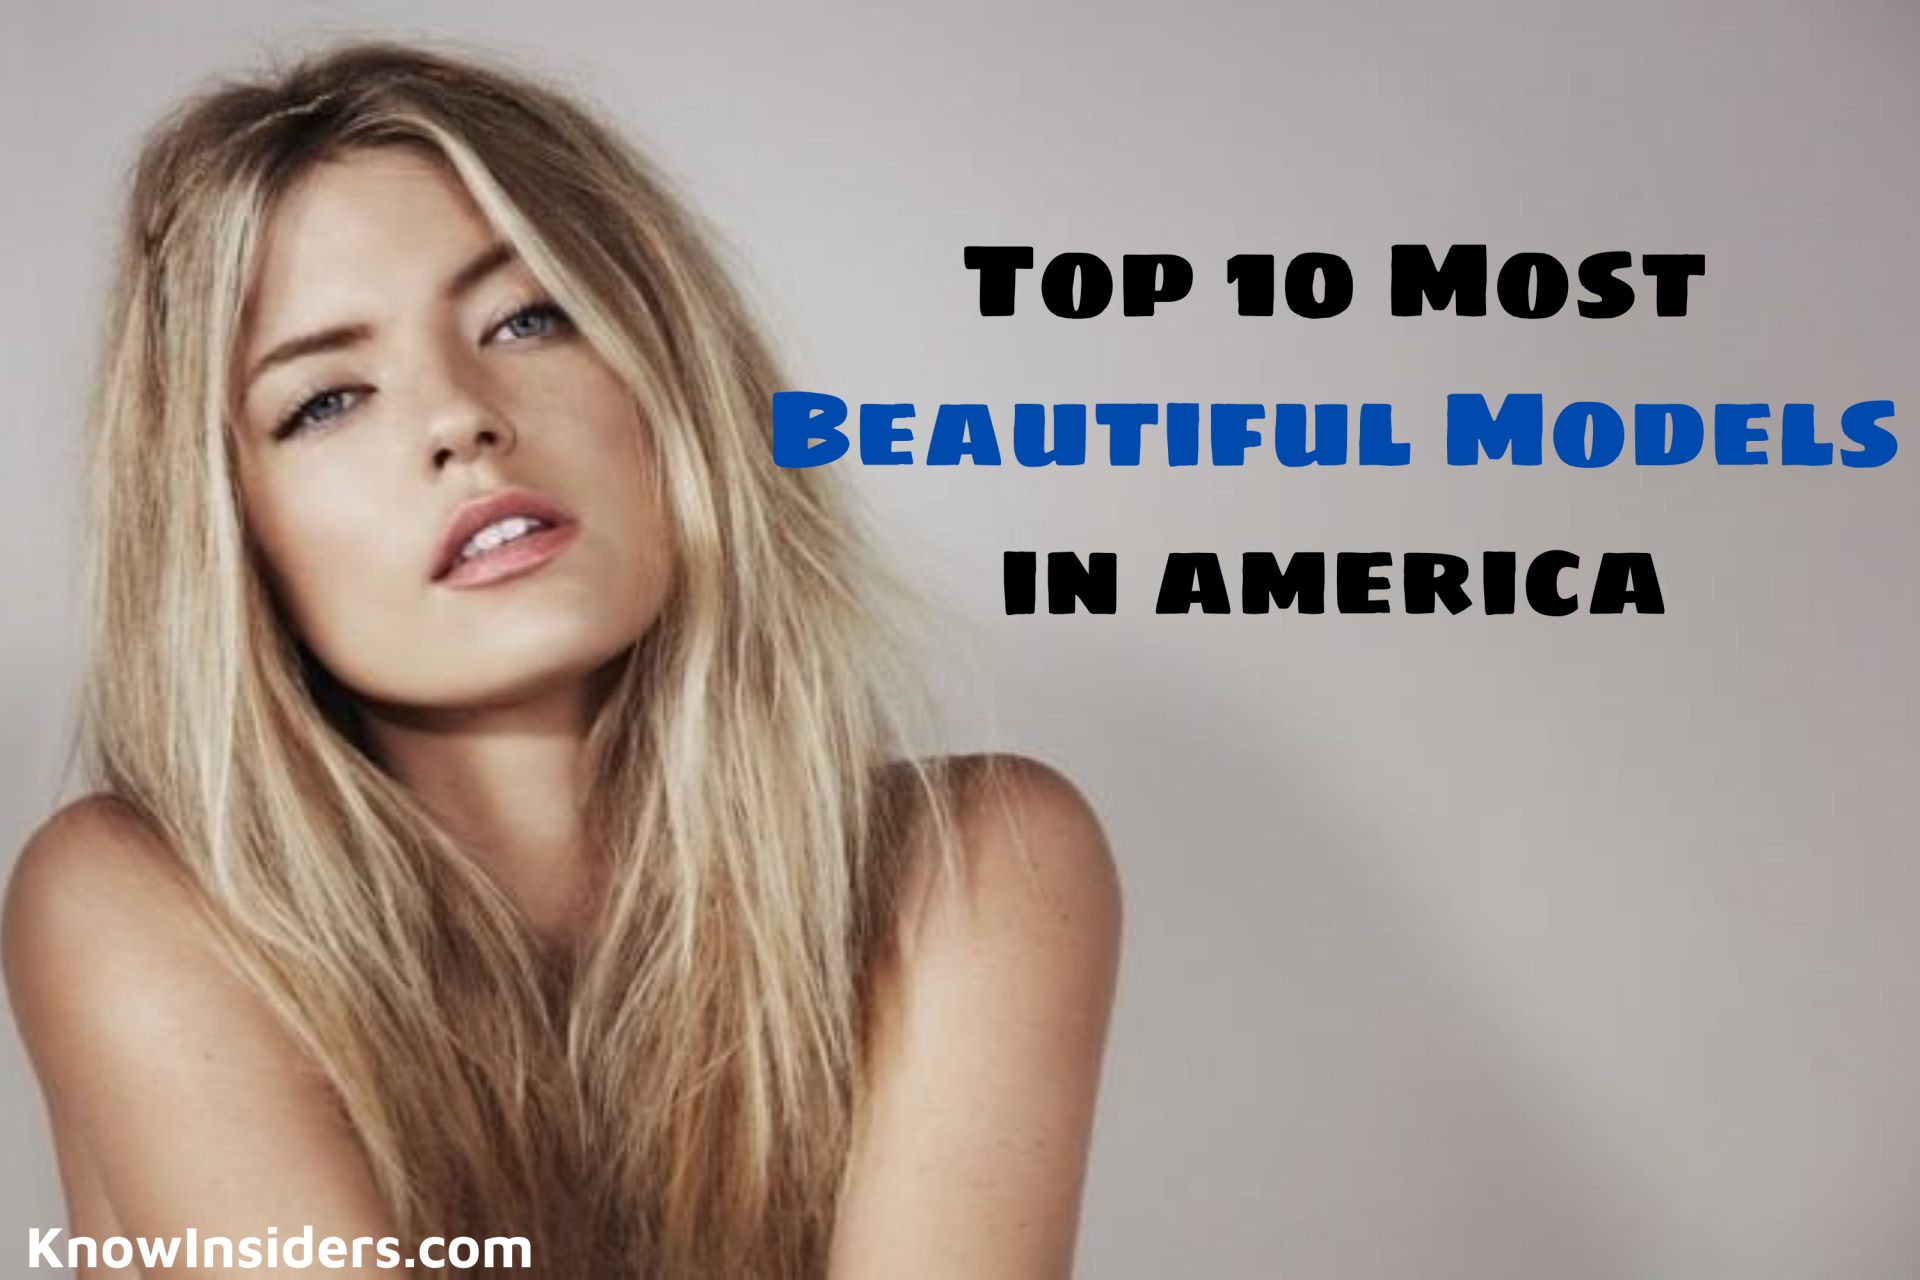 America's Top 10 Most Beautiful Models